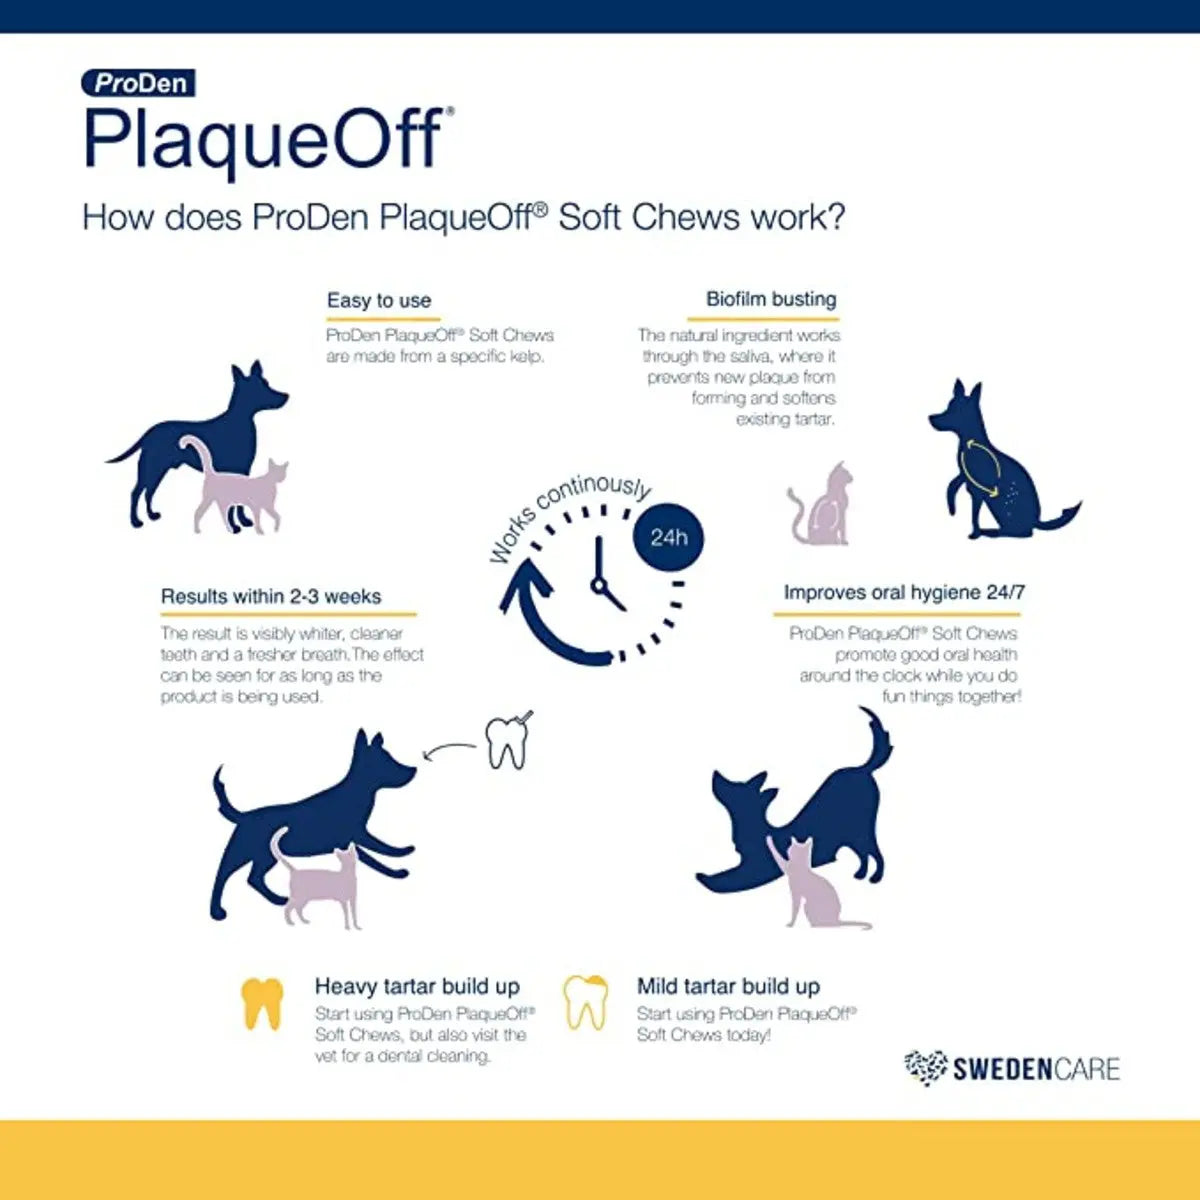 PlaqueOff Soft Chews Small/Medium Breed Dogs PlaqueOff